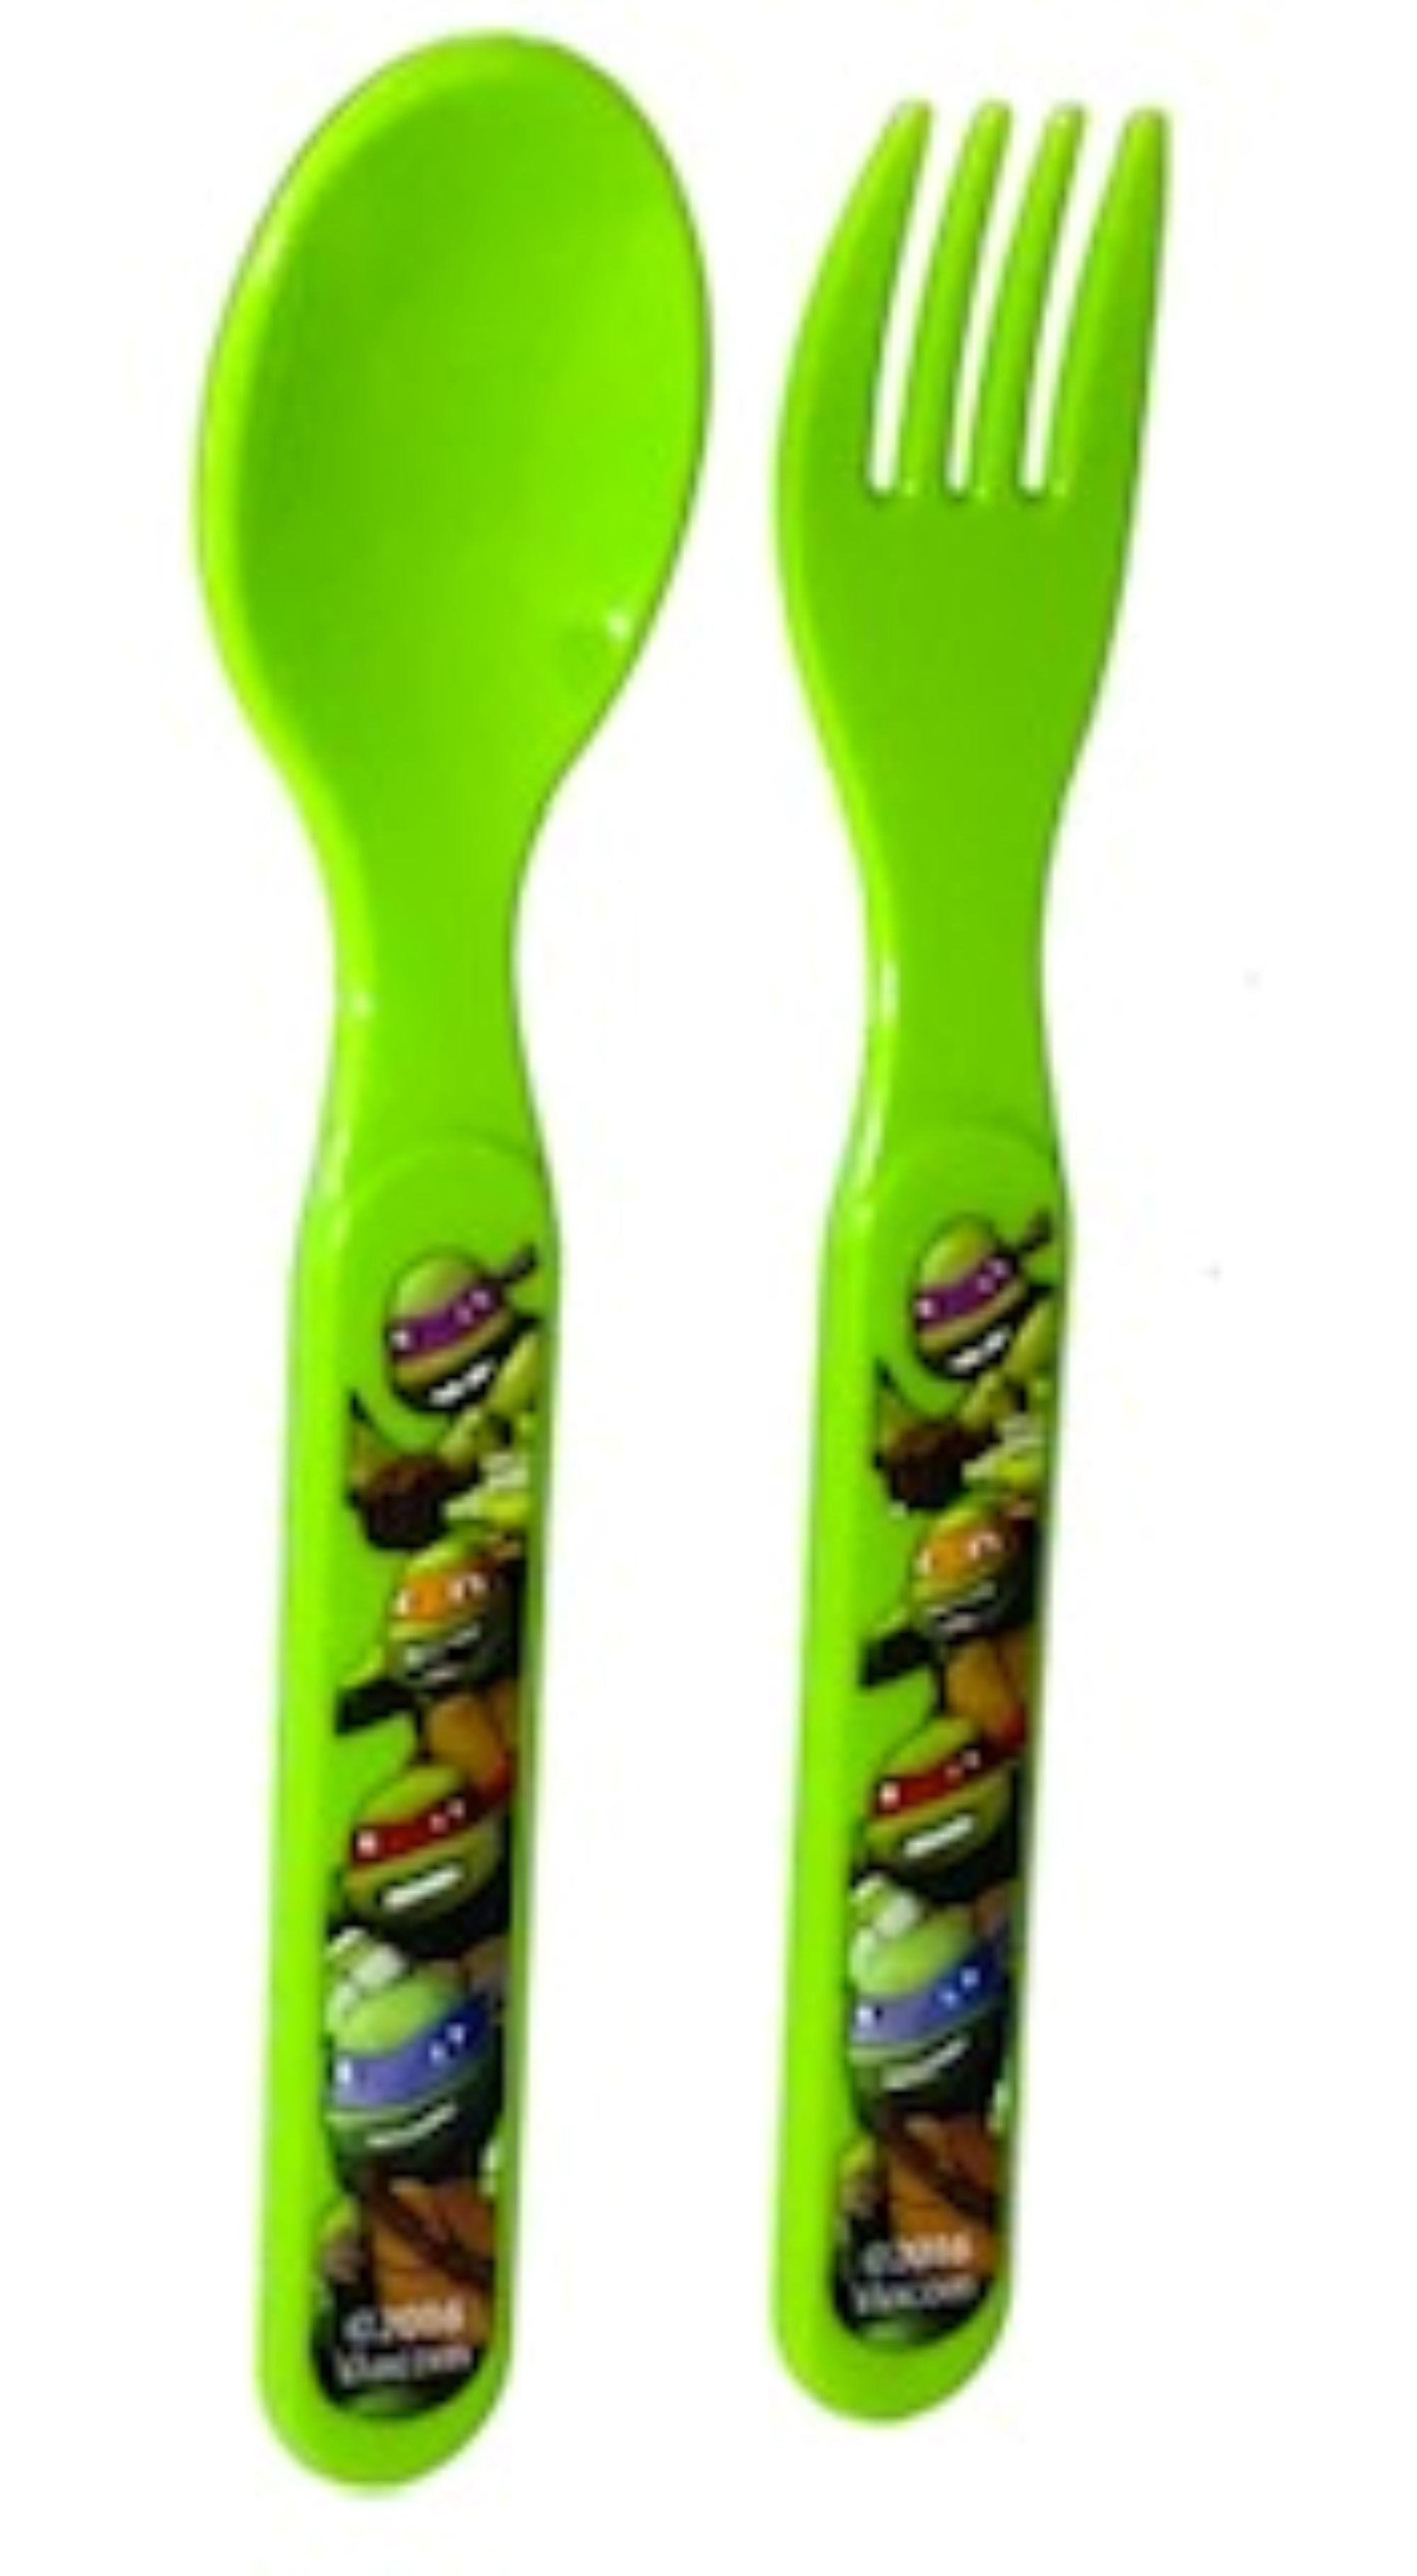 NEW Zak Teenage Mutant Ninja Turtles Flatware Set Plastic Utensils Fork Spoon 